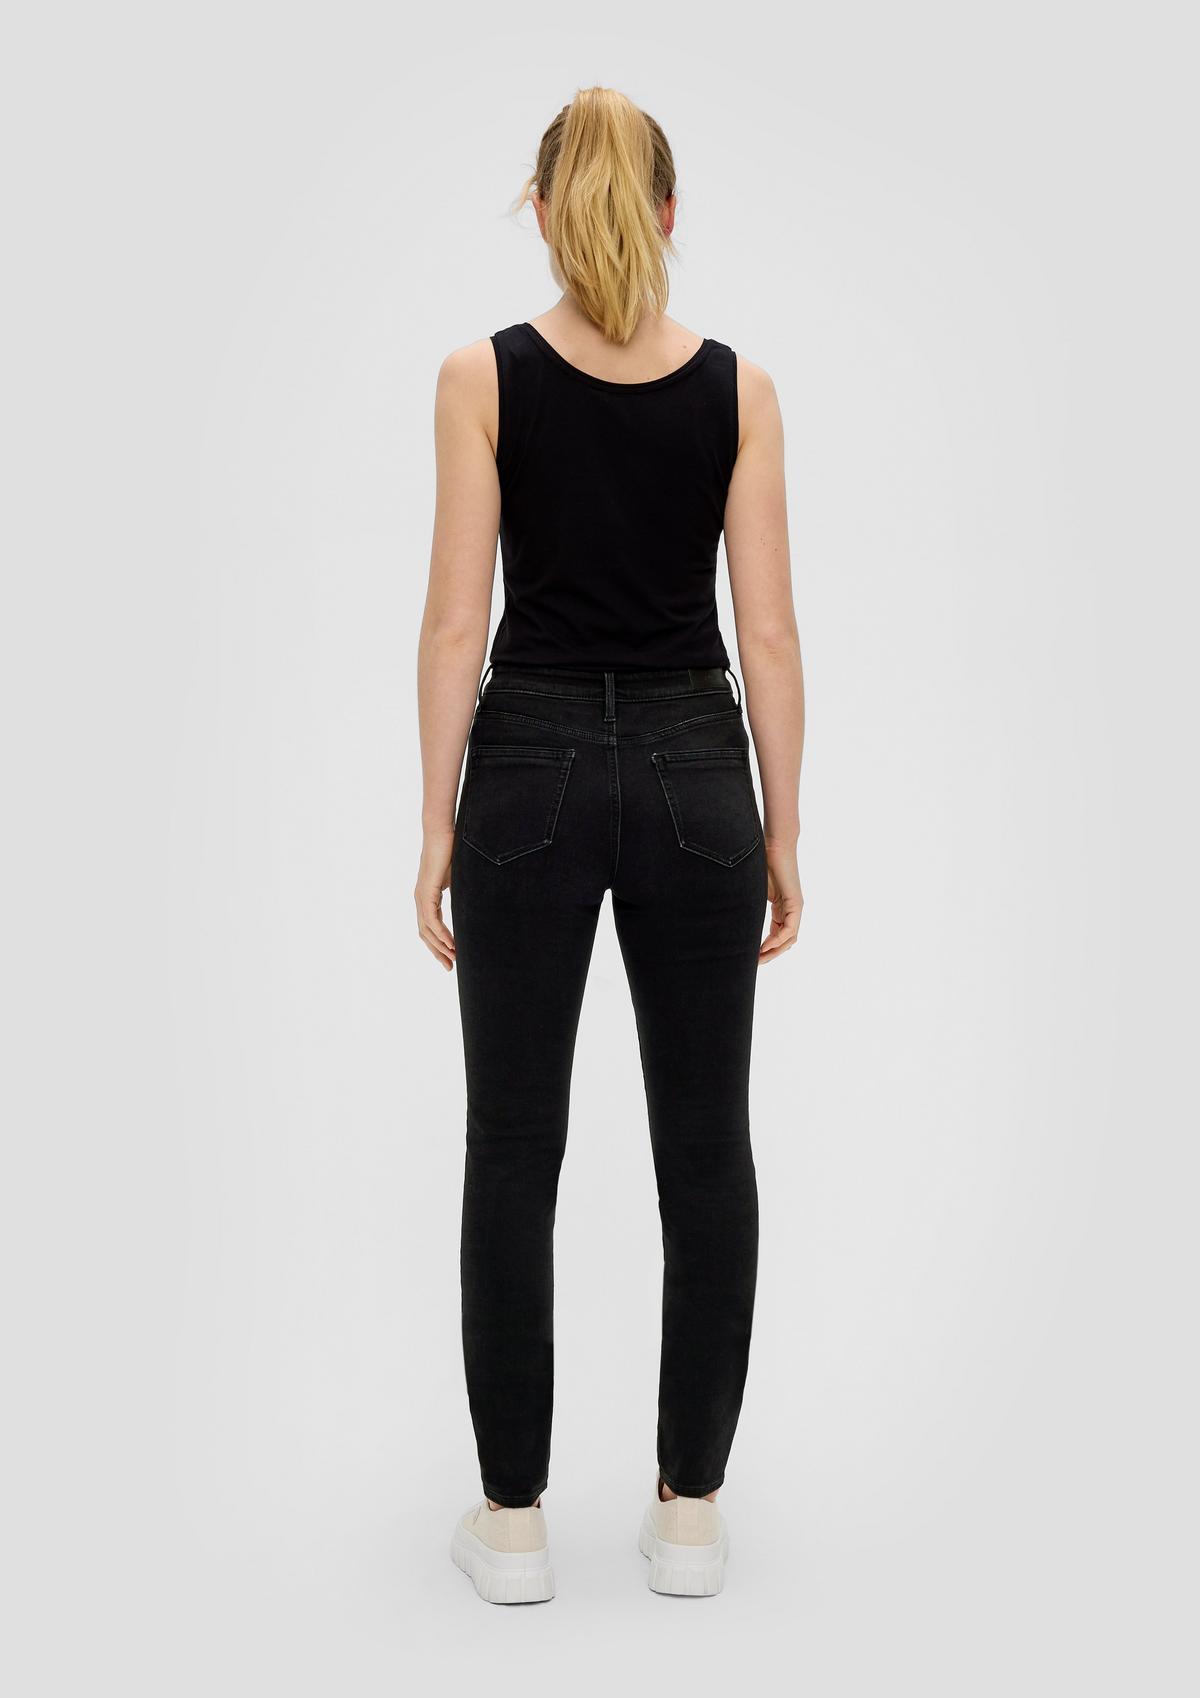 s.Oliver Jeans Izabell / skinny fit / high rise / skinny leg